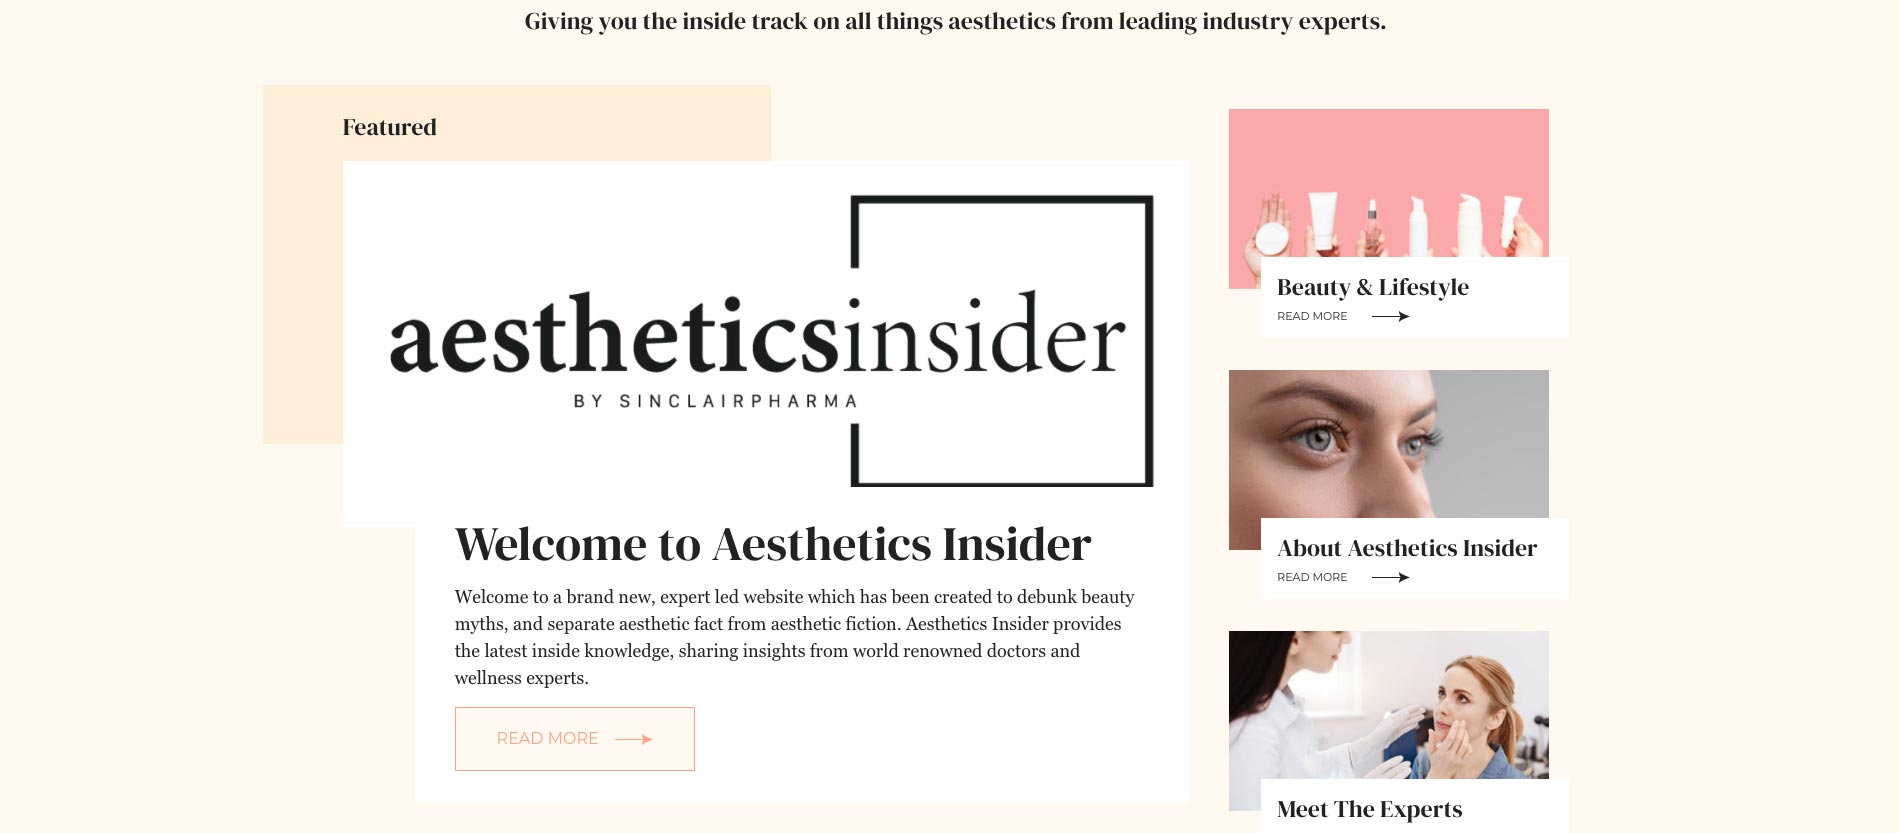 aesthetics insider website